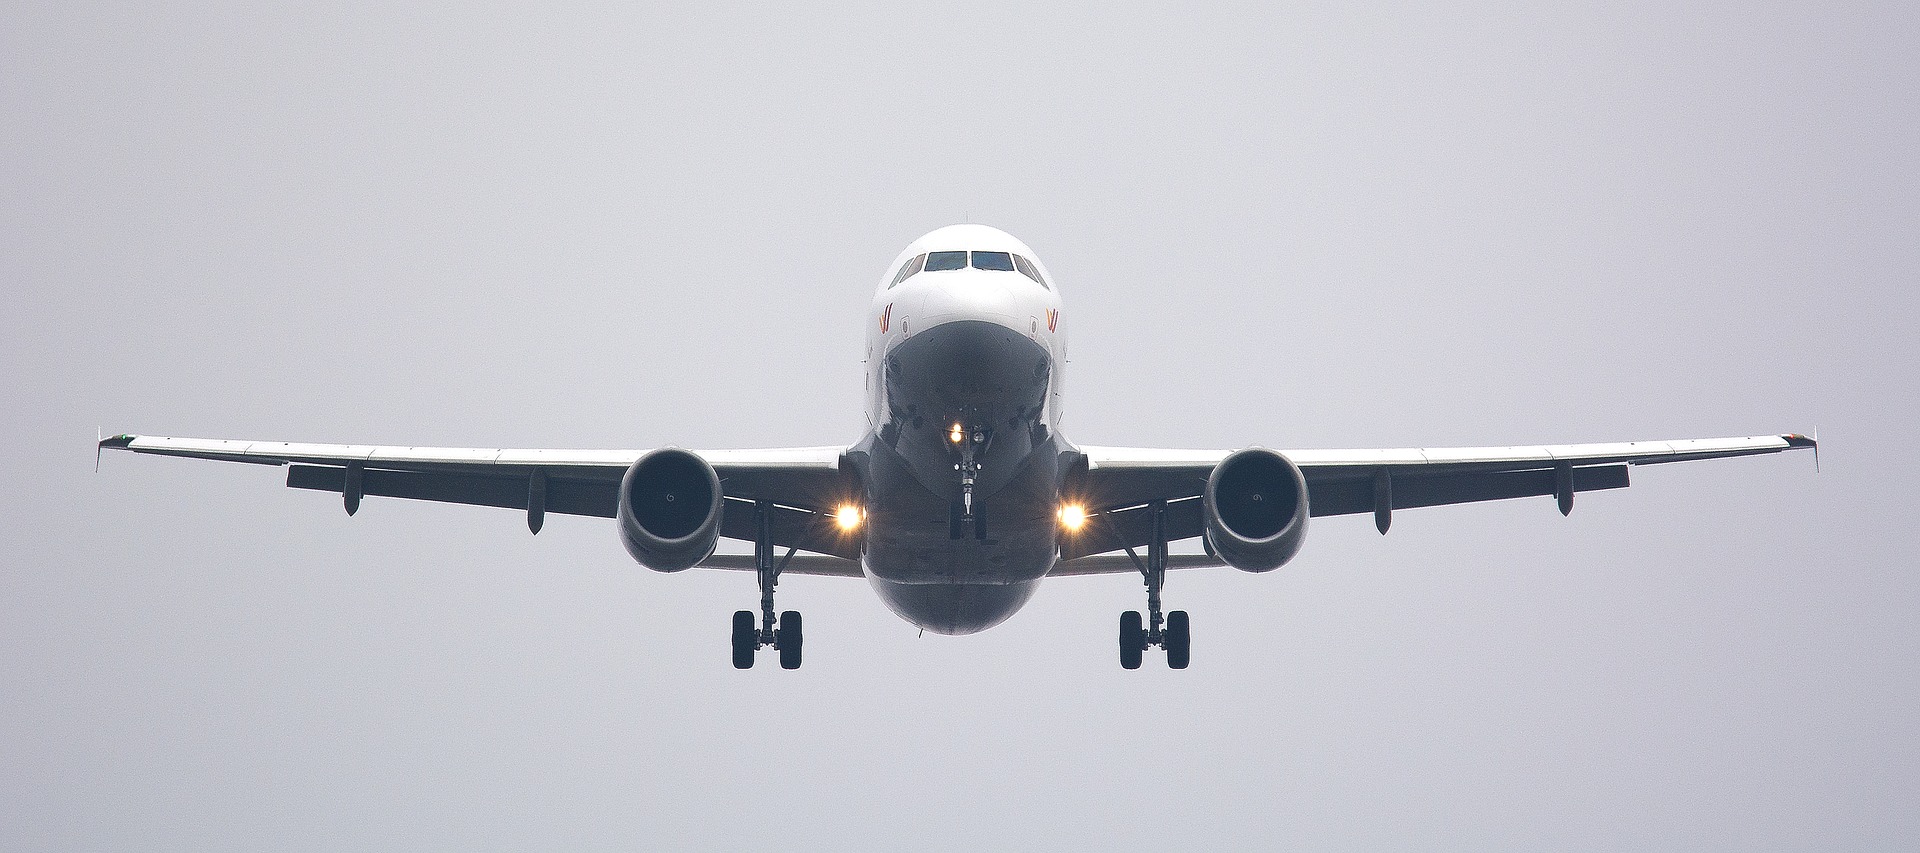 Молния ударила в заходящий на посадку самолёт в Сочи